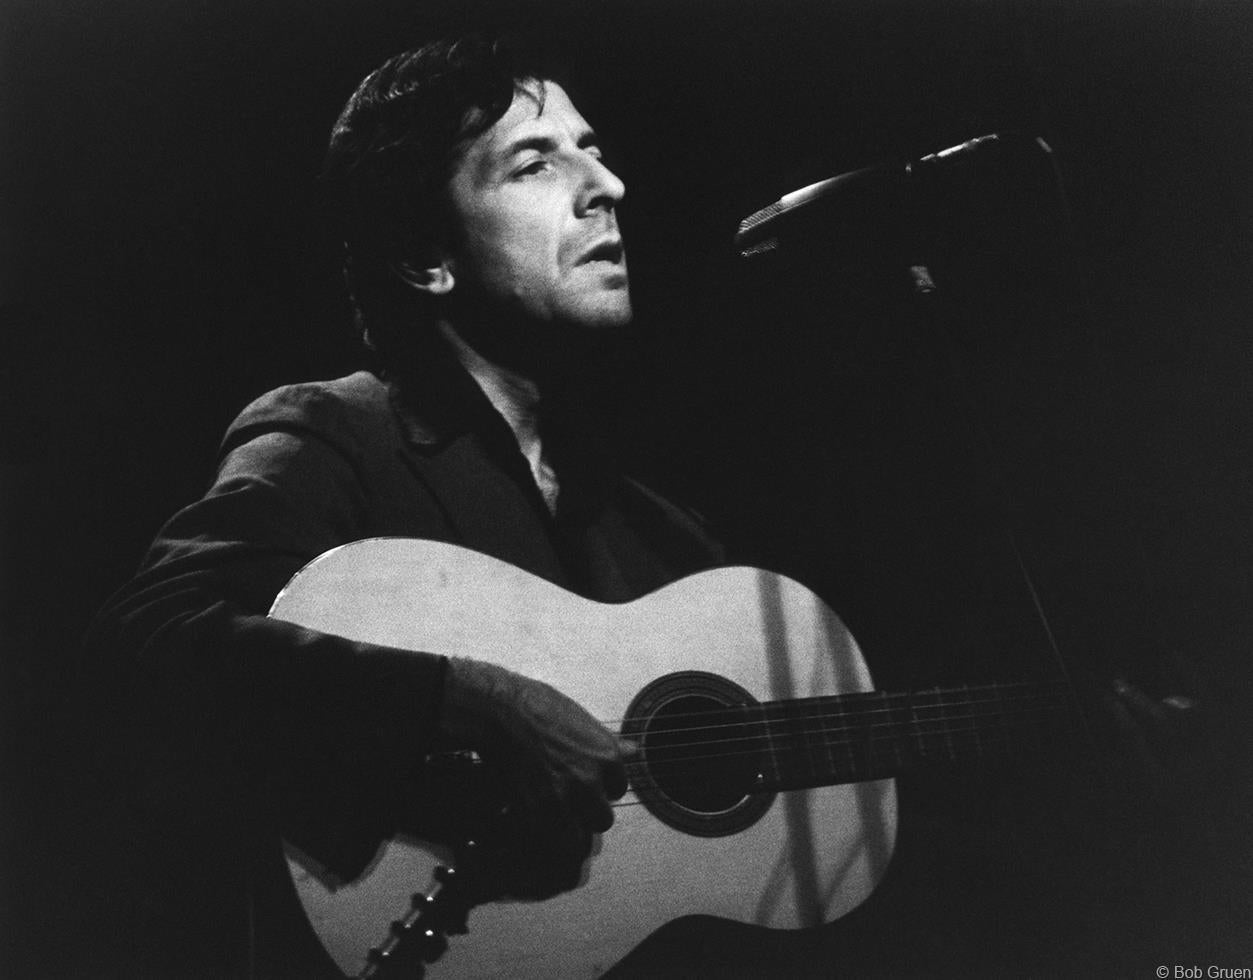 Portrait Photograph Bob Gruen - Leonard Cohen, NYC, 1974